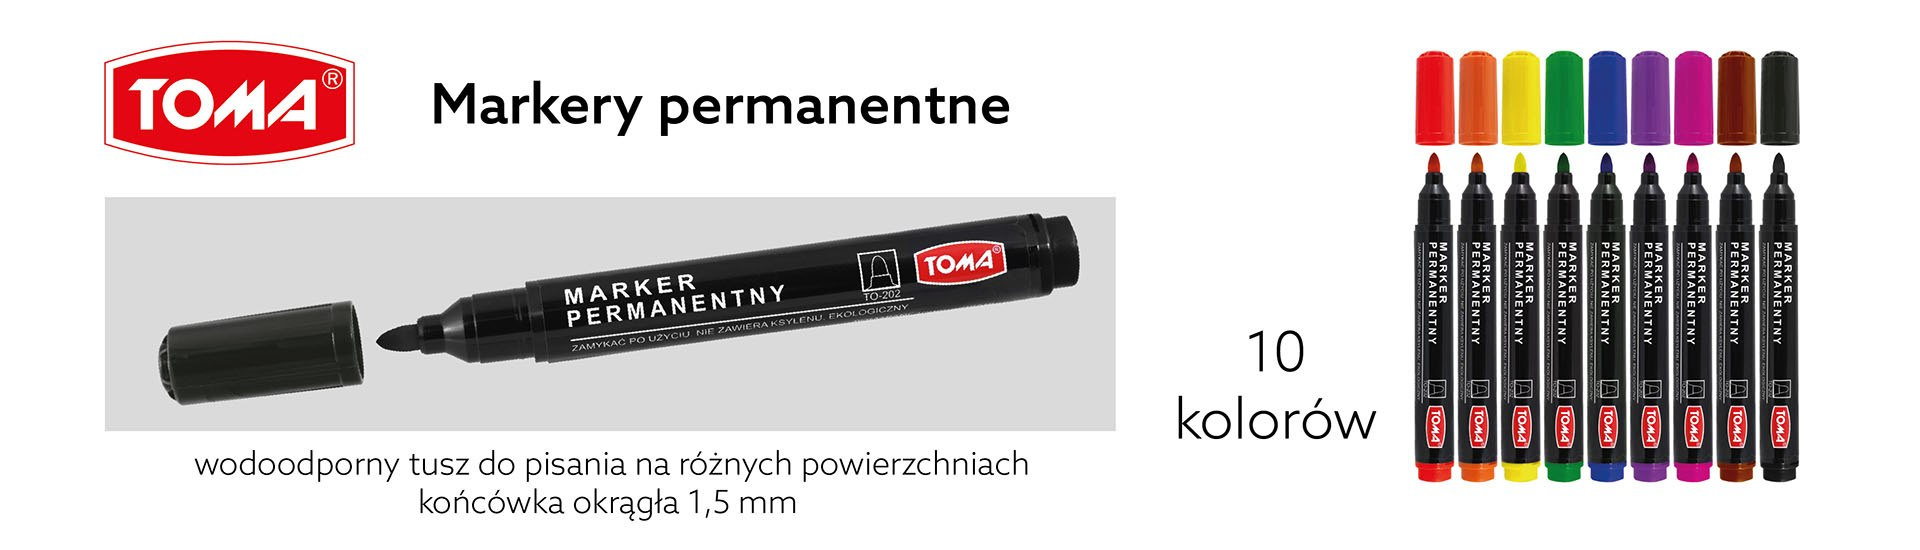 TOMA-ebiuromarket_markery-permanentne